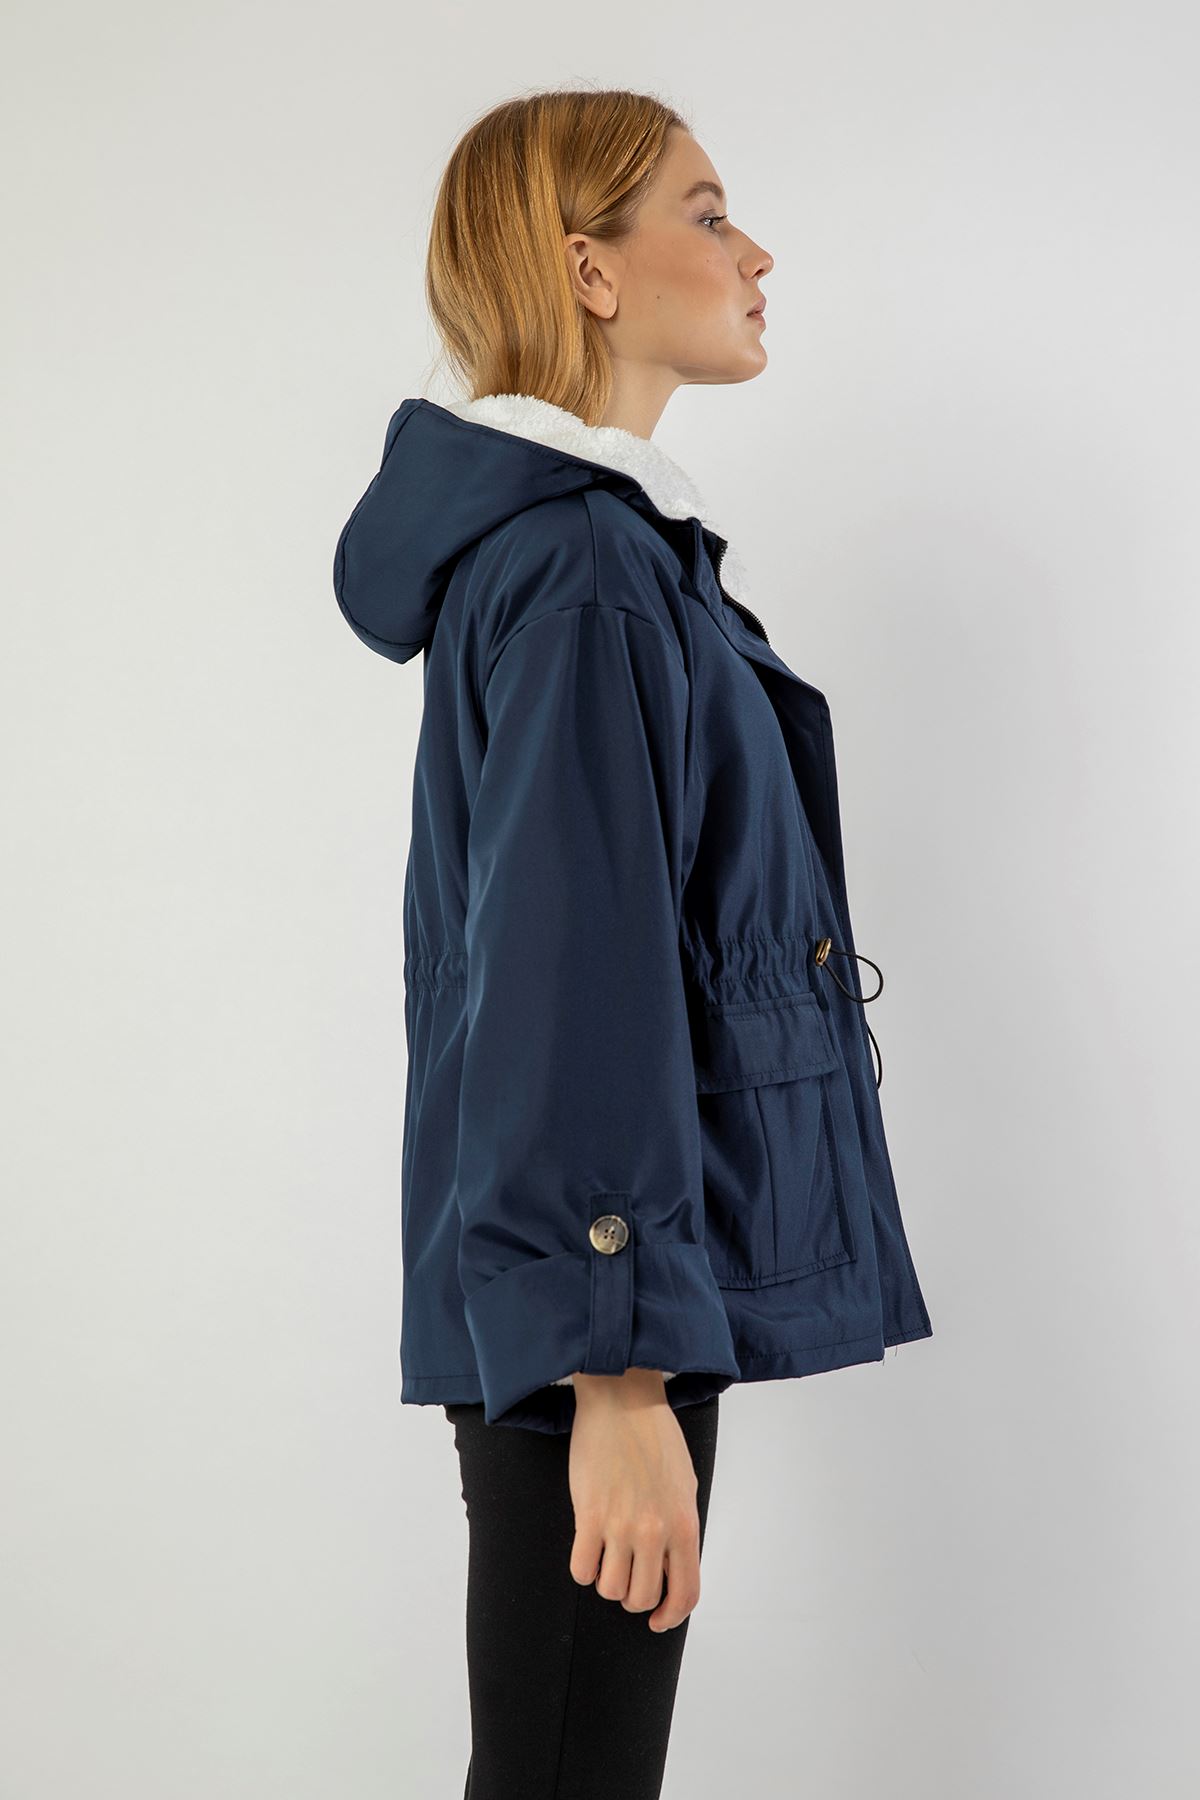 Long Sleeve Zip Neck Short Oversize Plush Women Raincoat - Navy Blue 